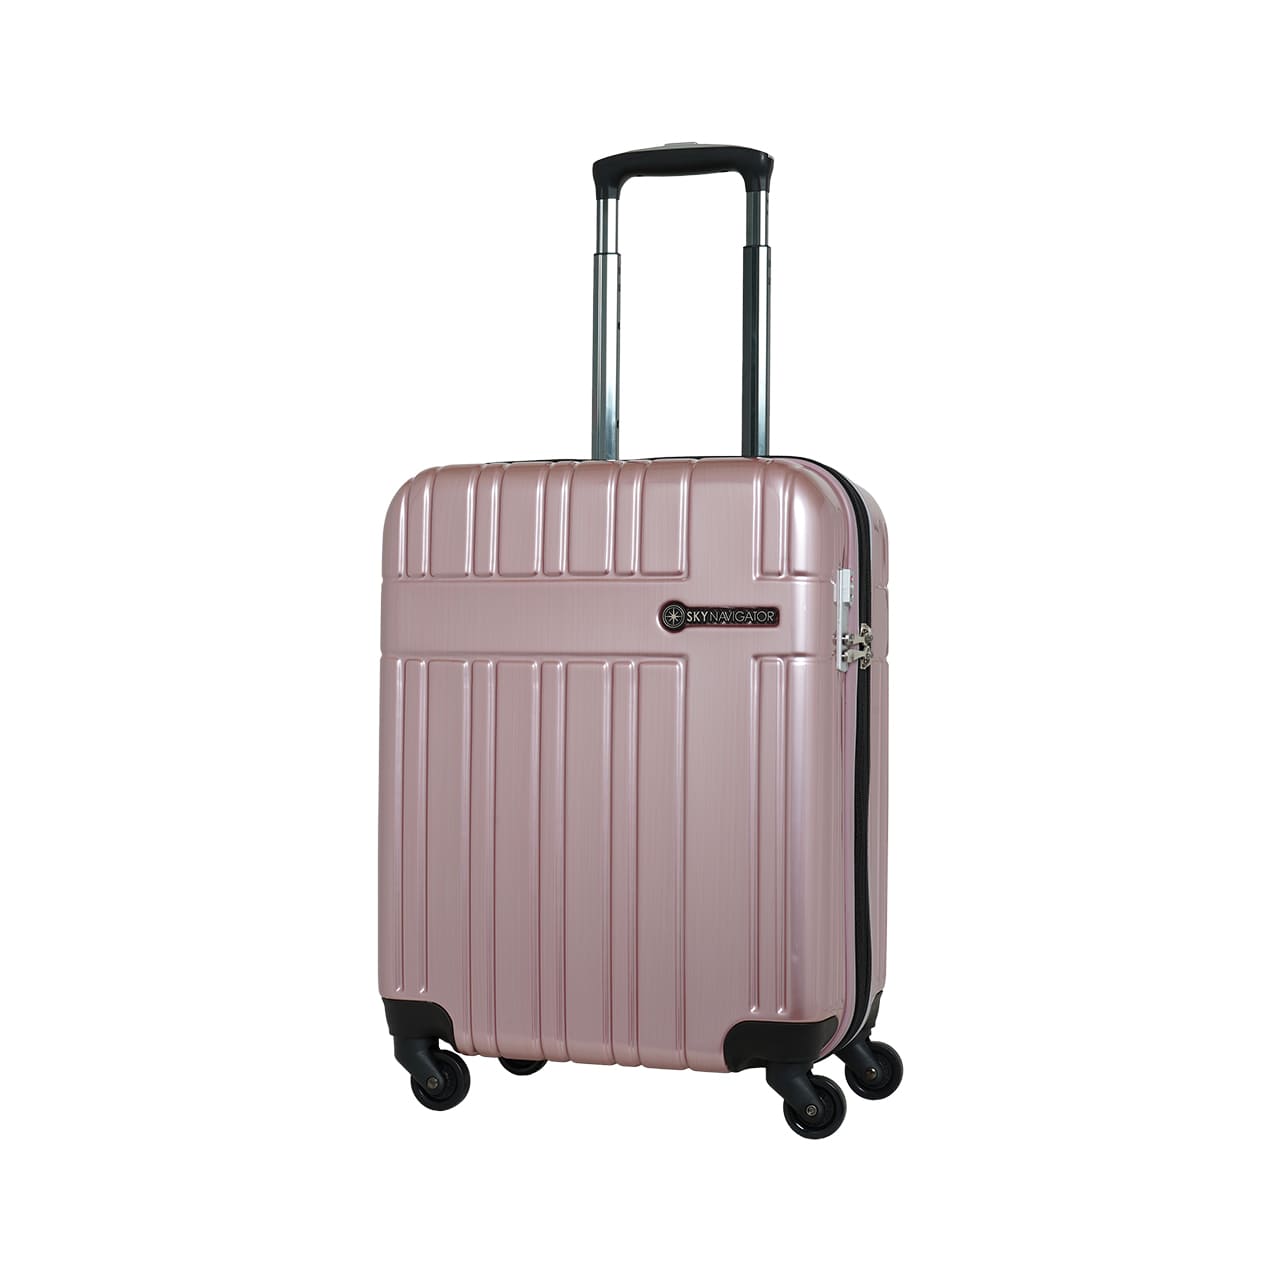 SKYNAVIGATORのスーツケースSK-0835-48のピンクヘアラインの正面振り画像